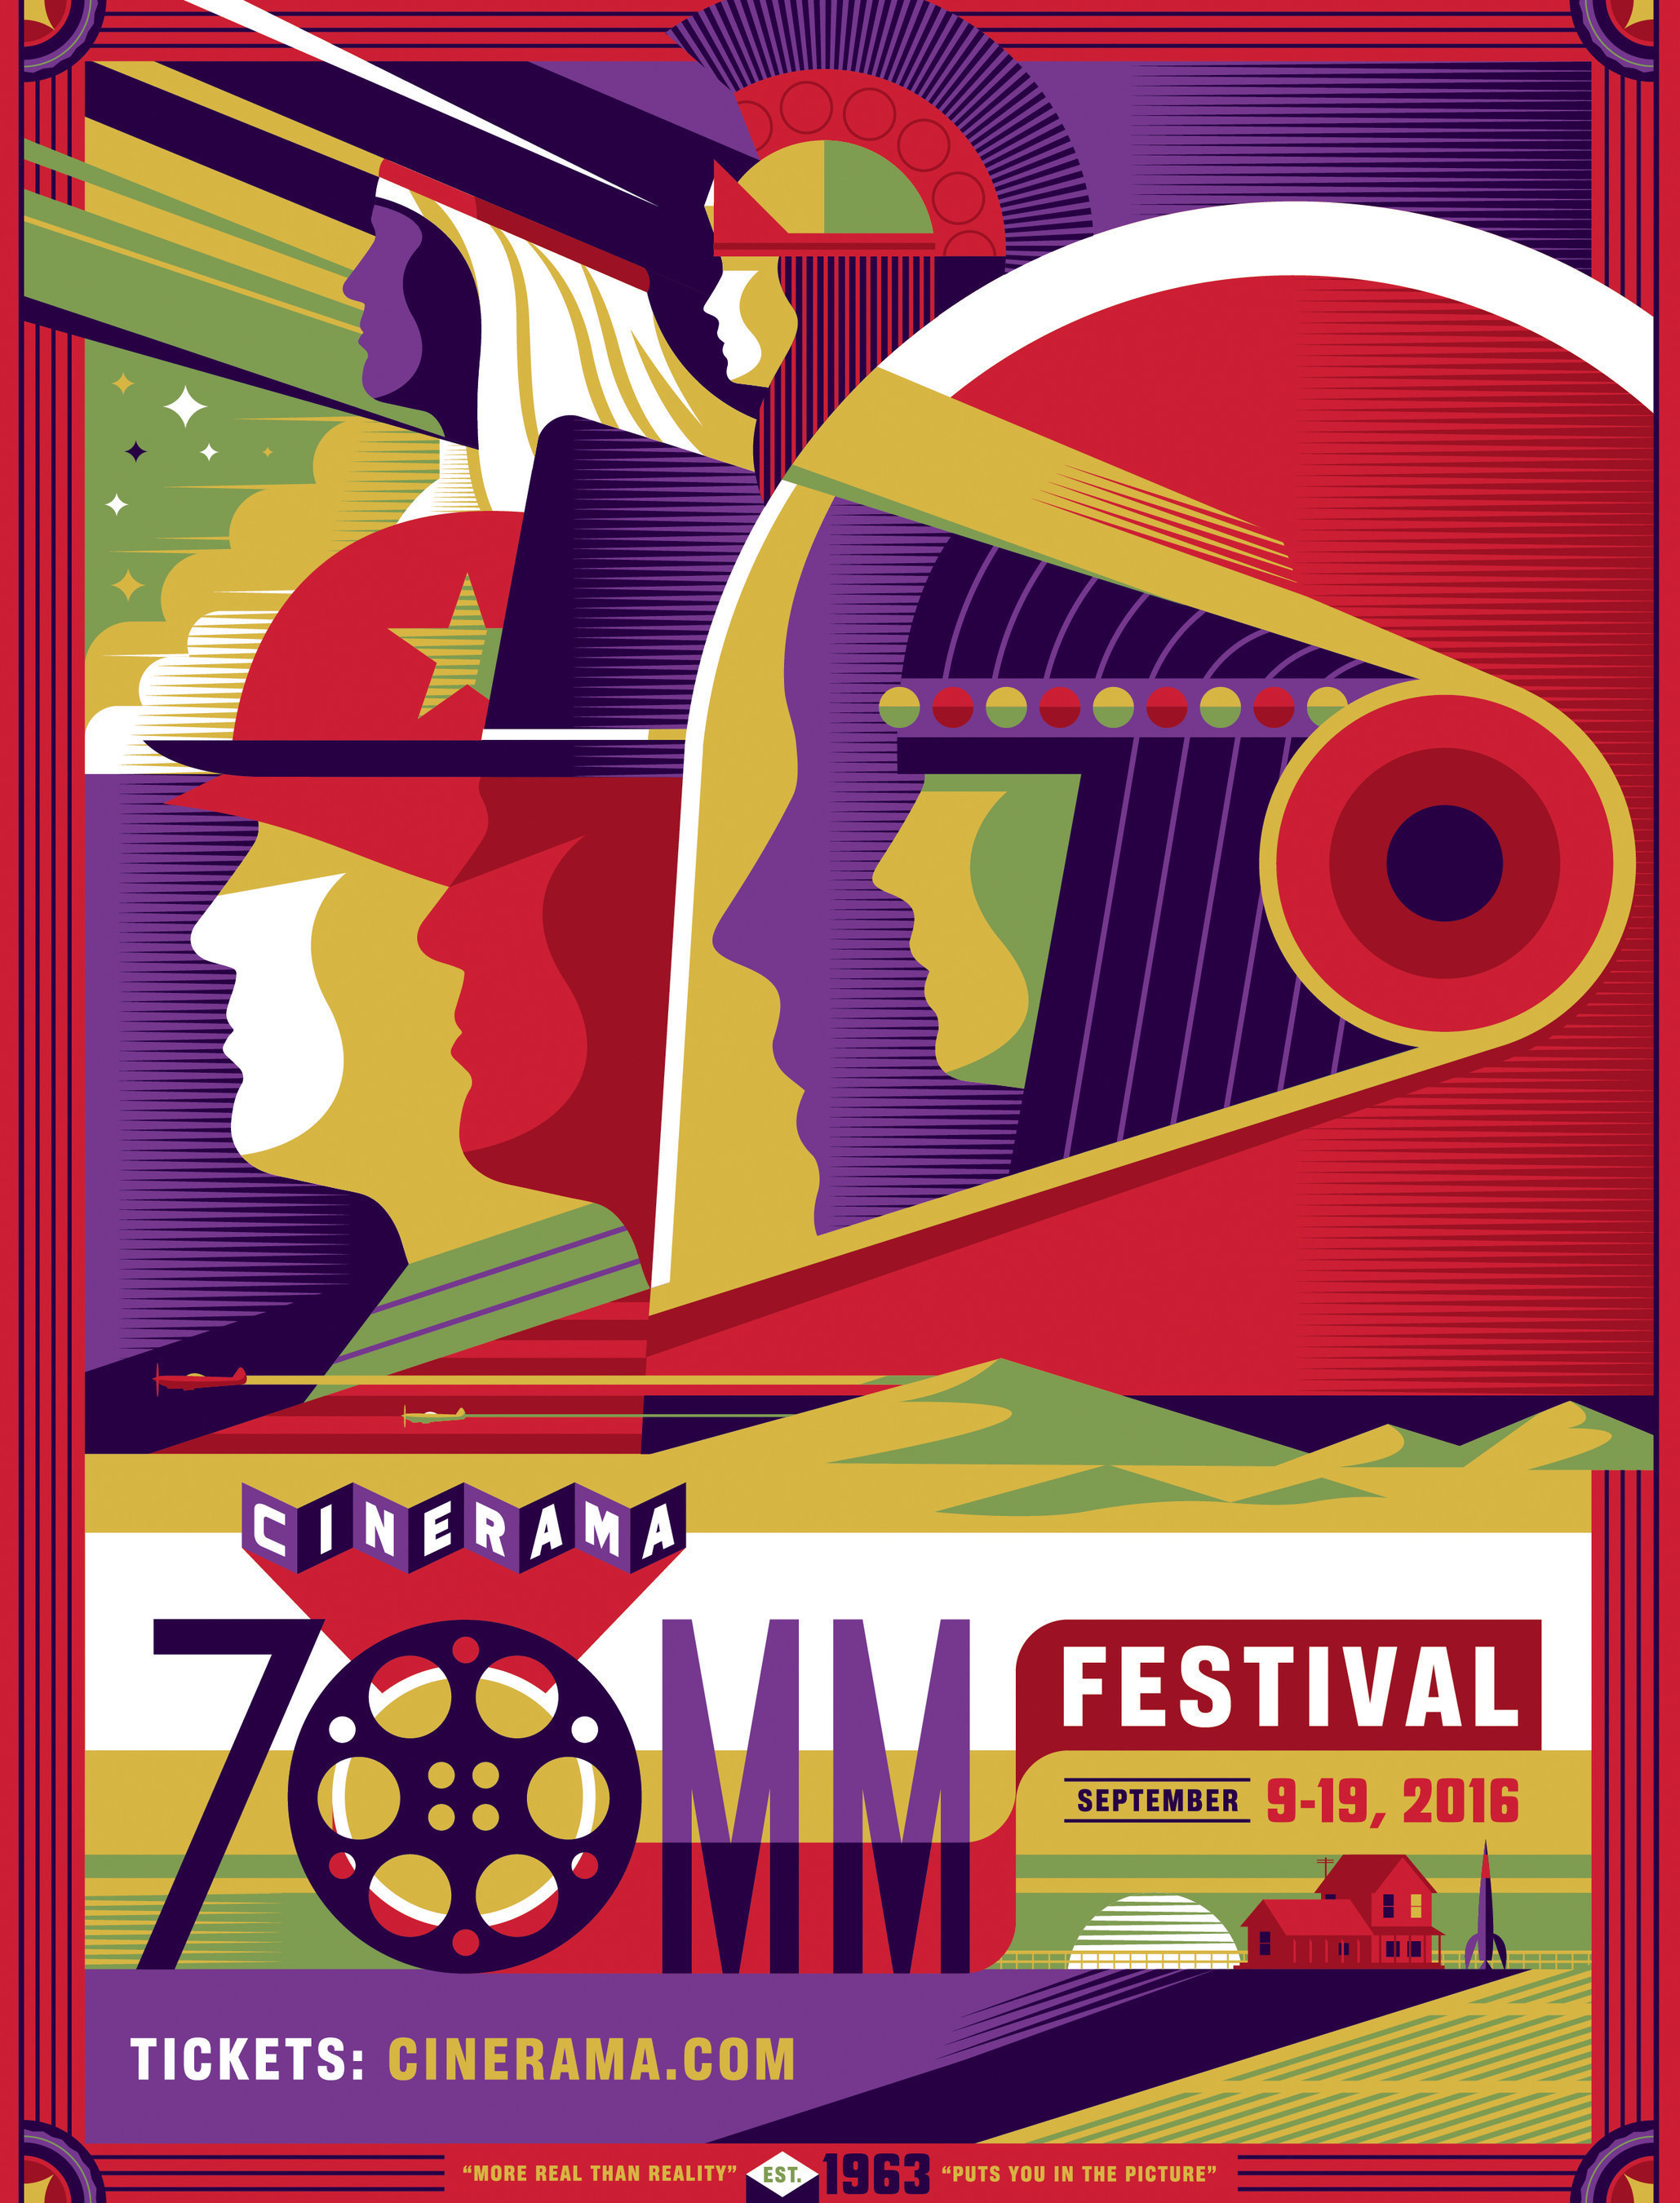 2016 Cinerama 70mm Film Festival Poster